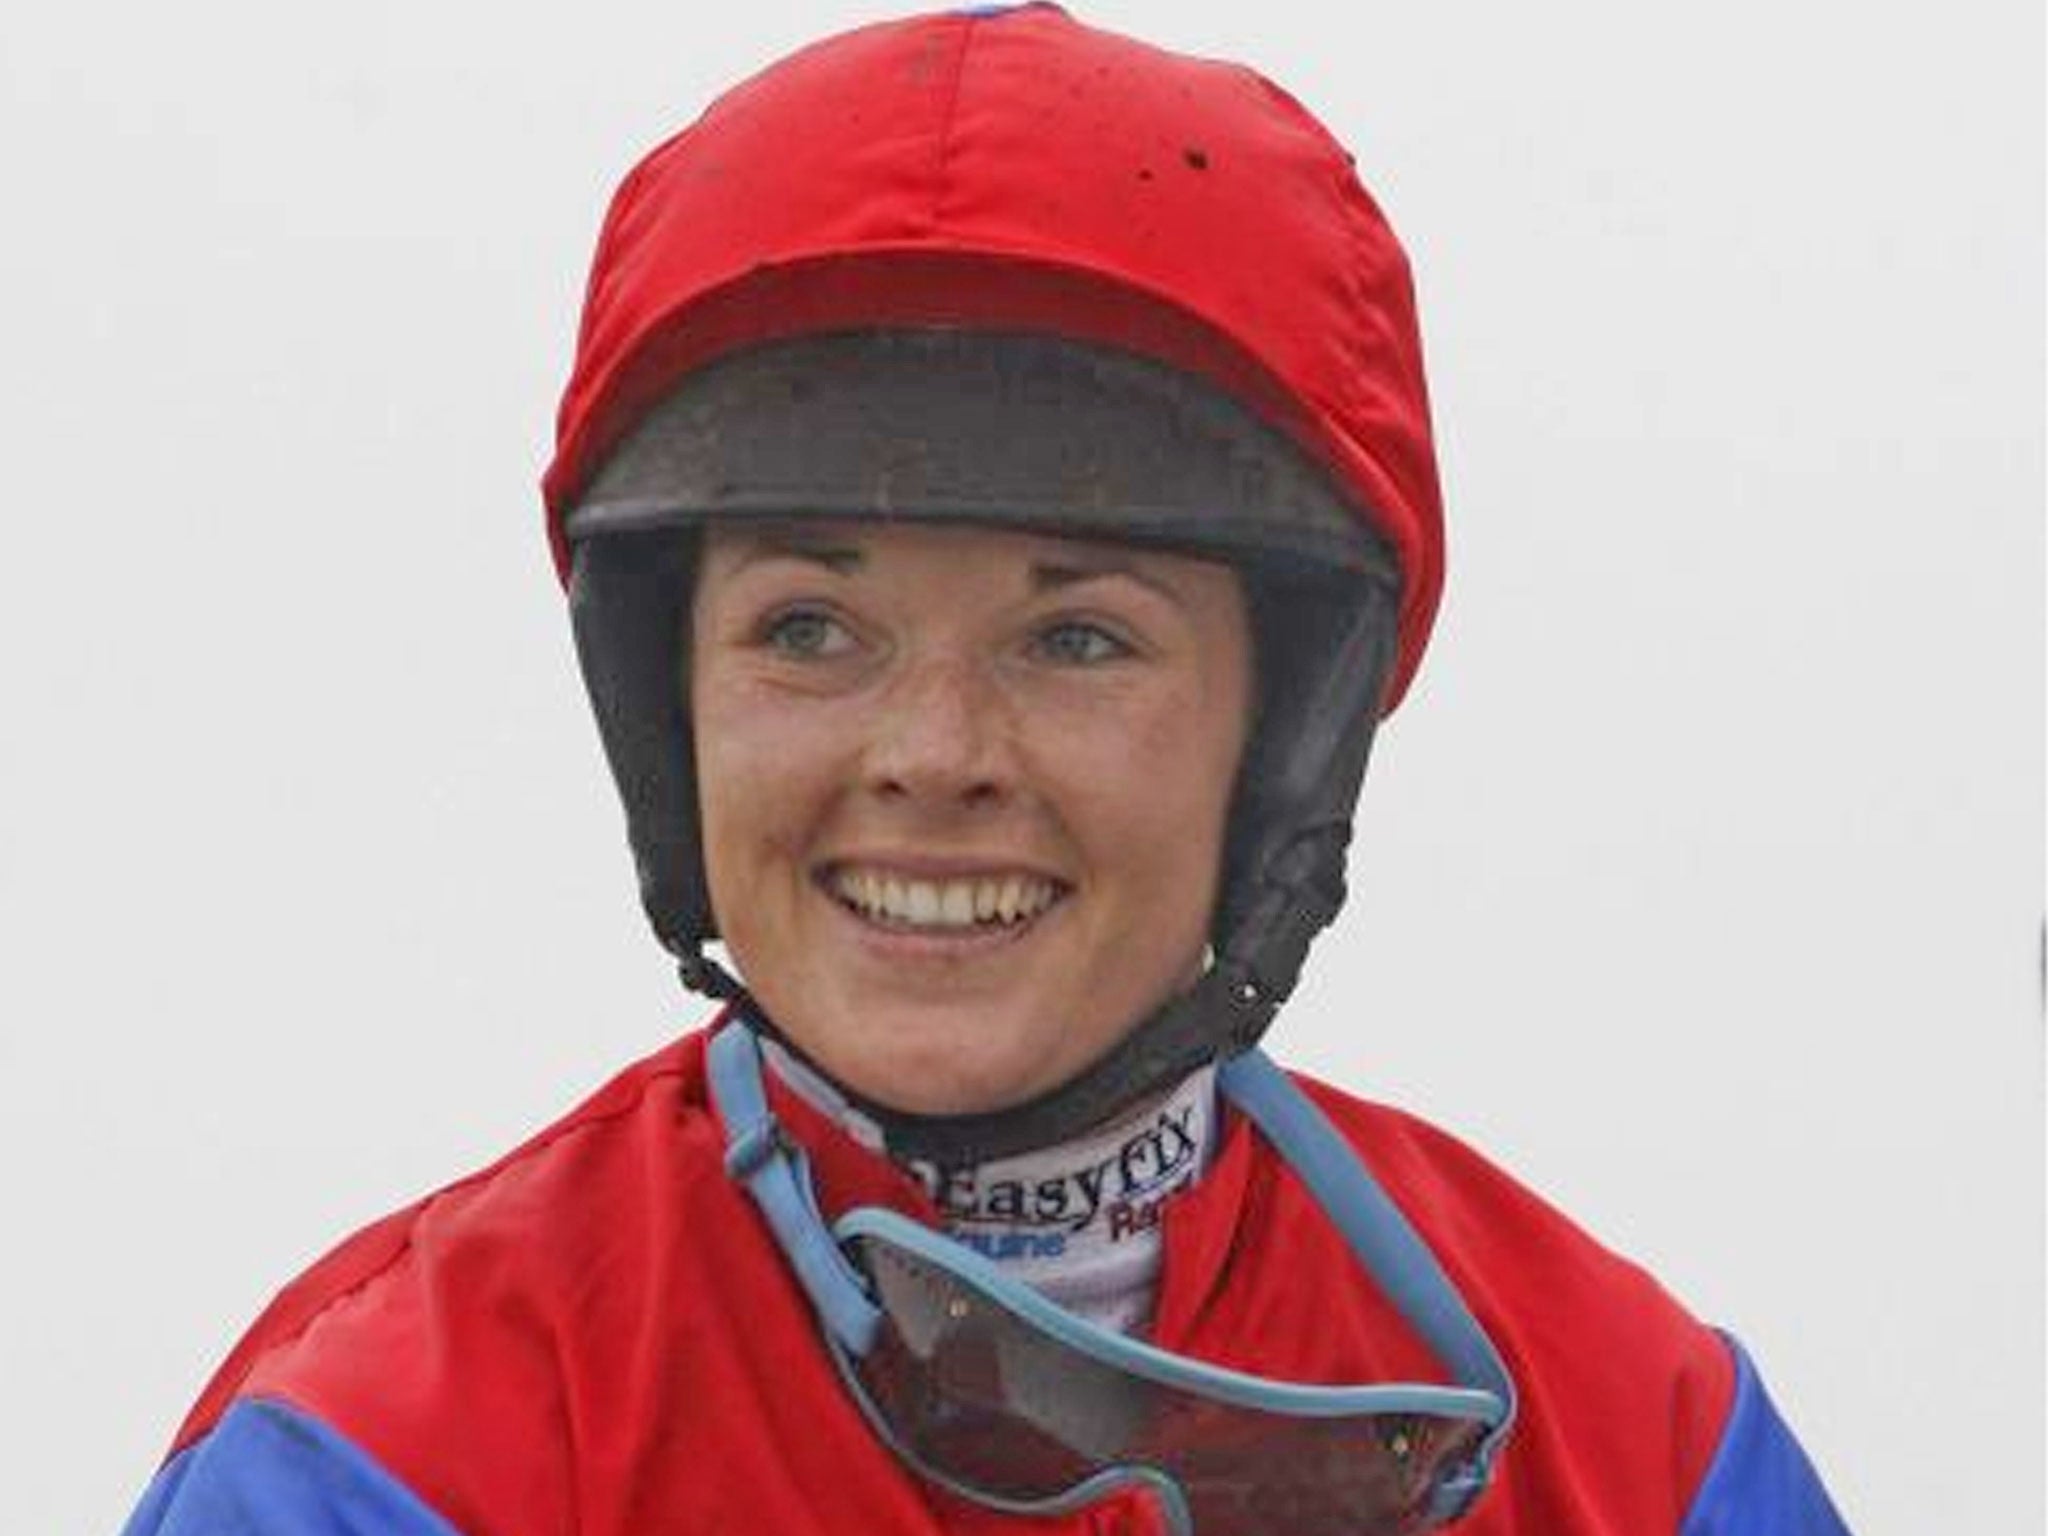 Grand National jockey Katie Walsh